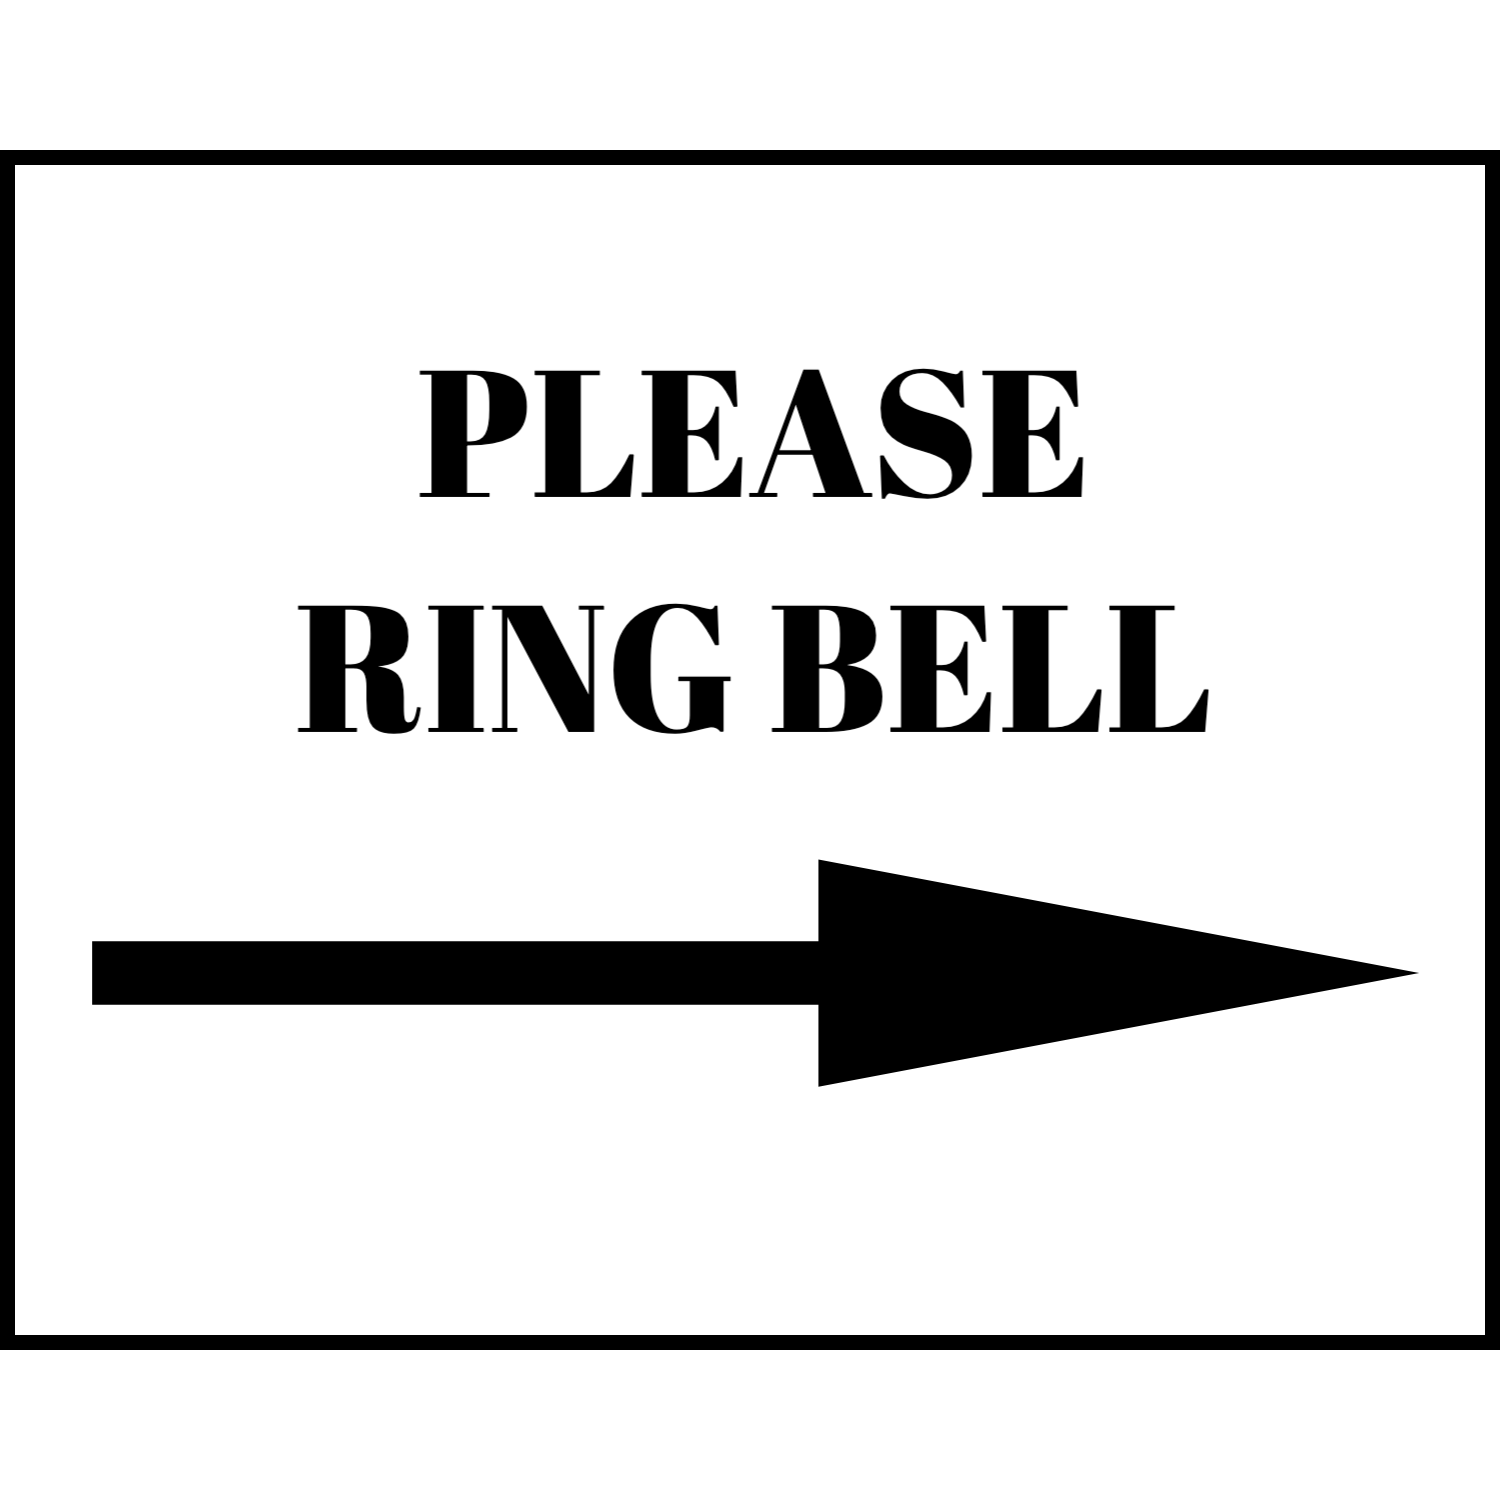 Please Ring Bell on Door Sign - Get 10% Off Now